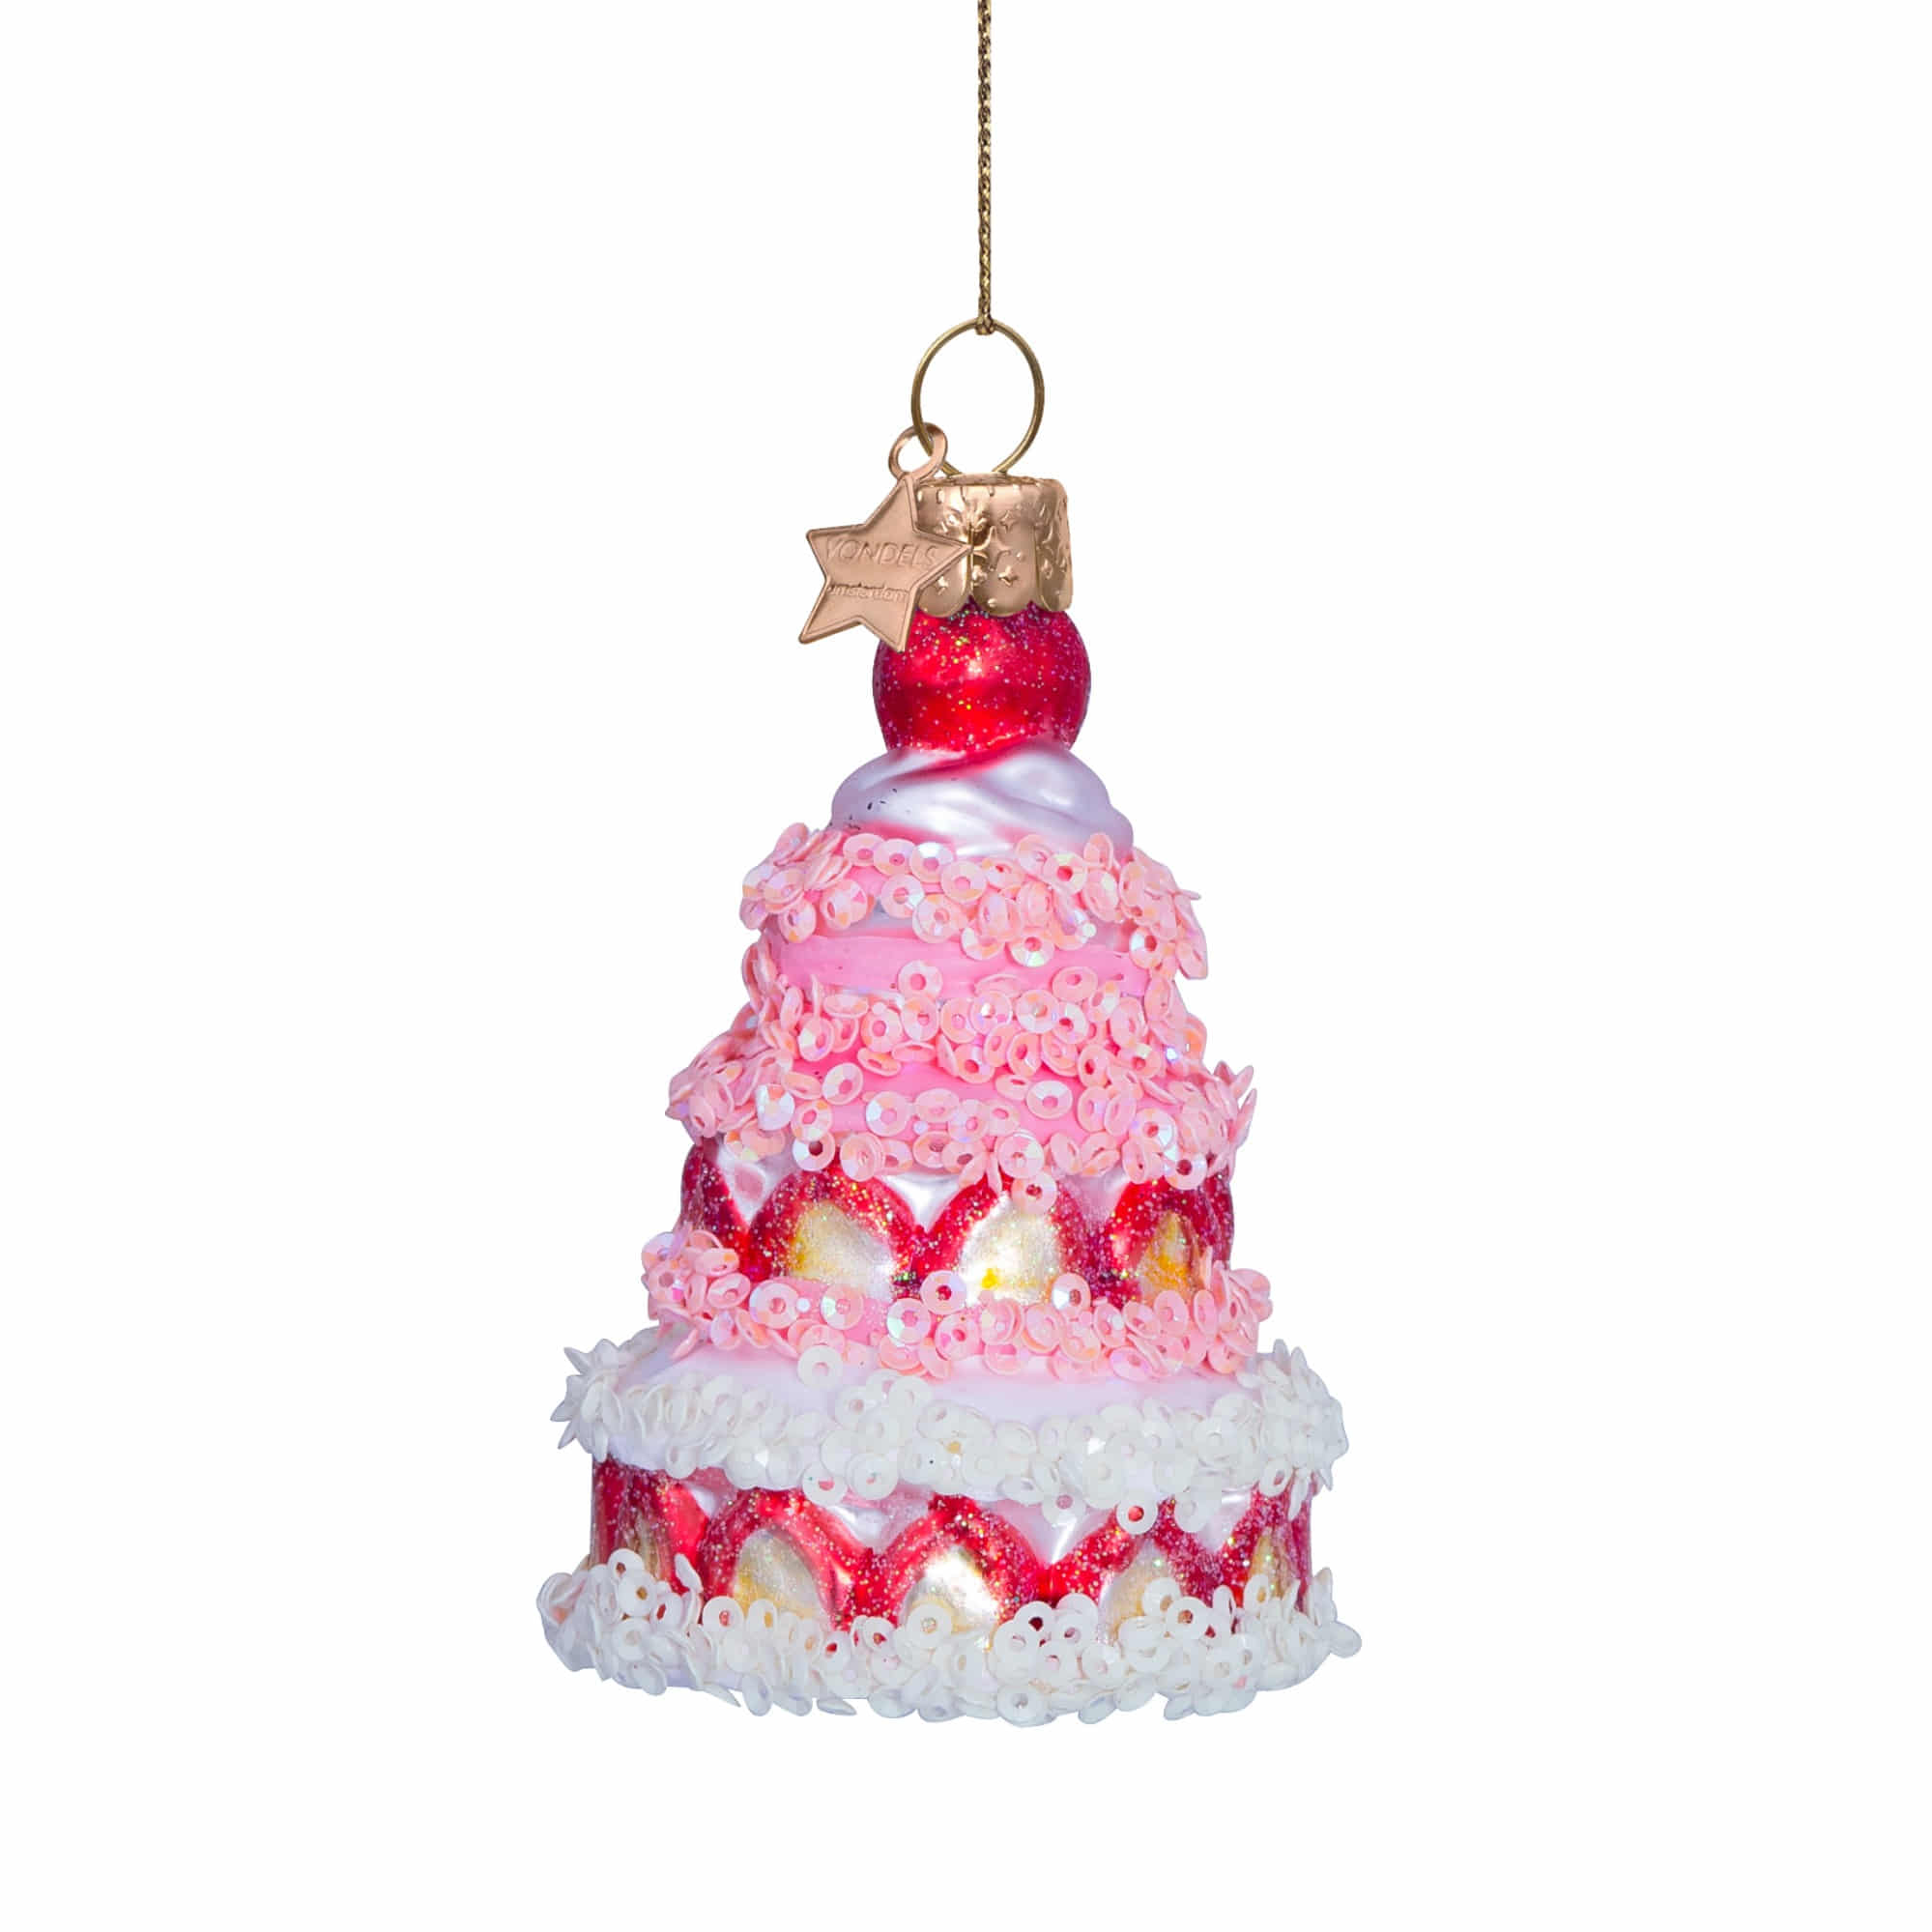 VONDELS Ornament Multi Strawberry Cake